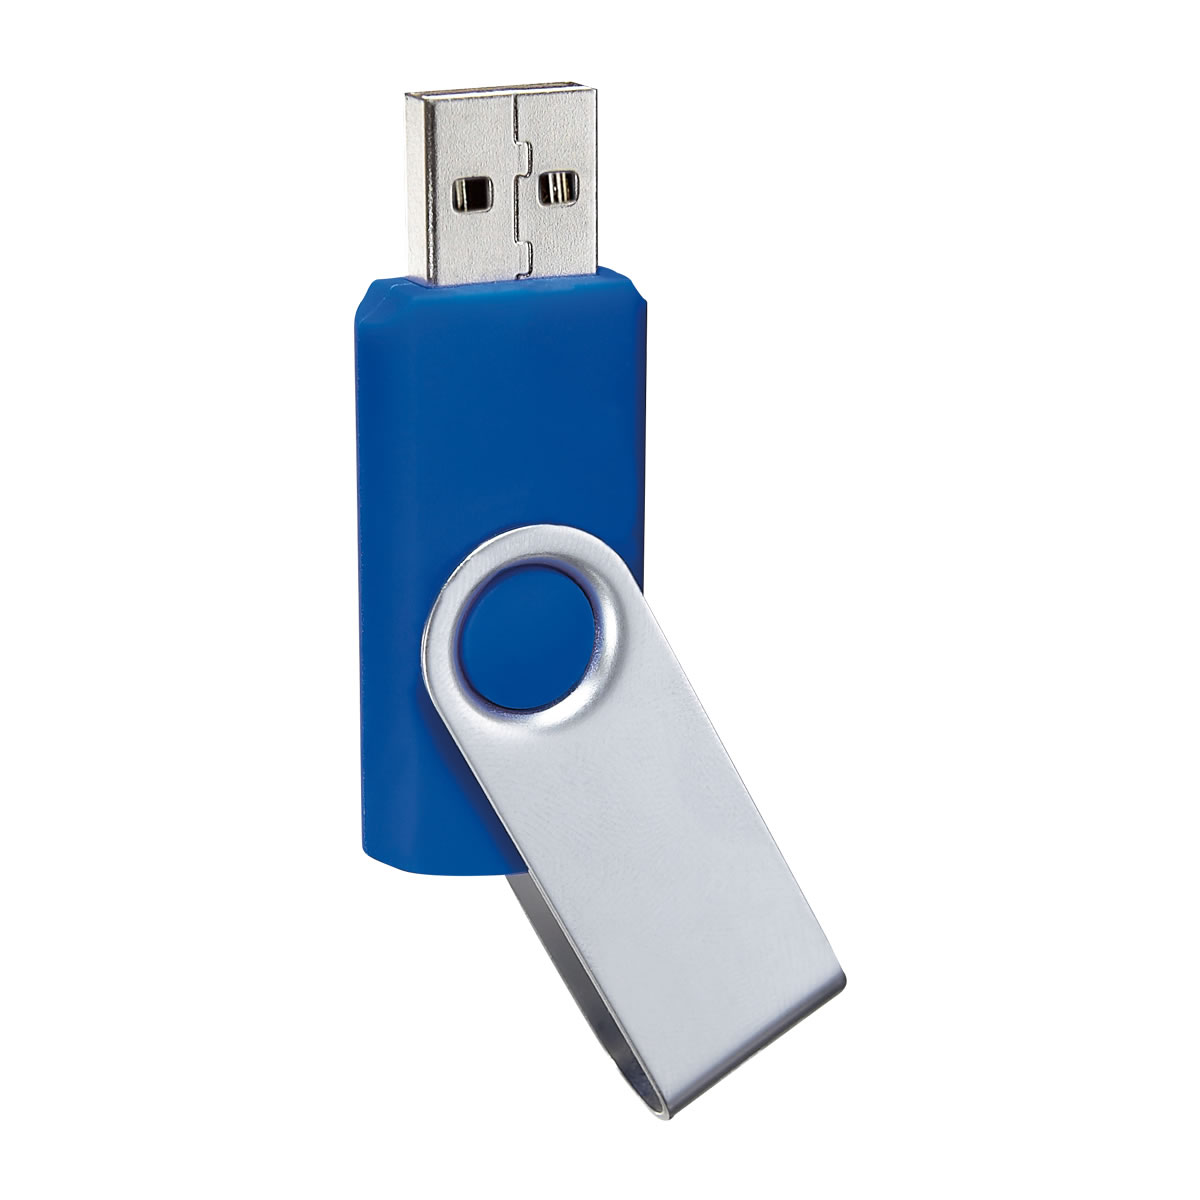 CC1713 - USB SELWIN 16 GB